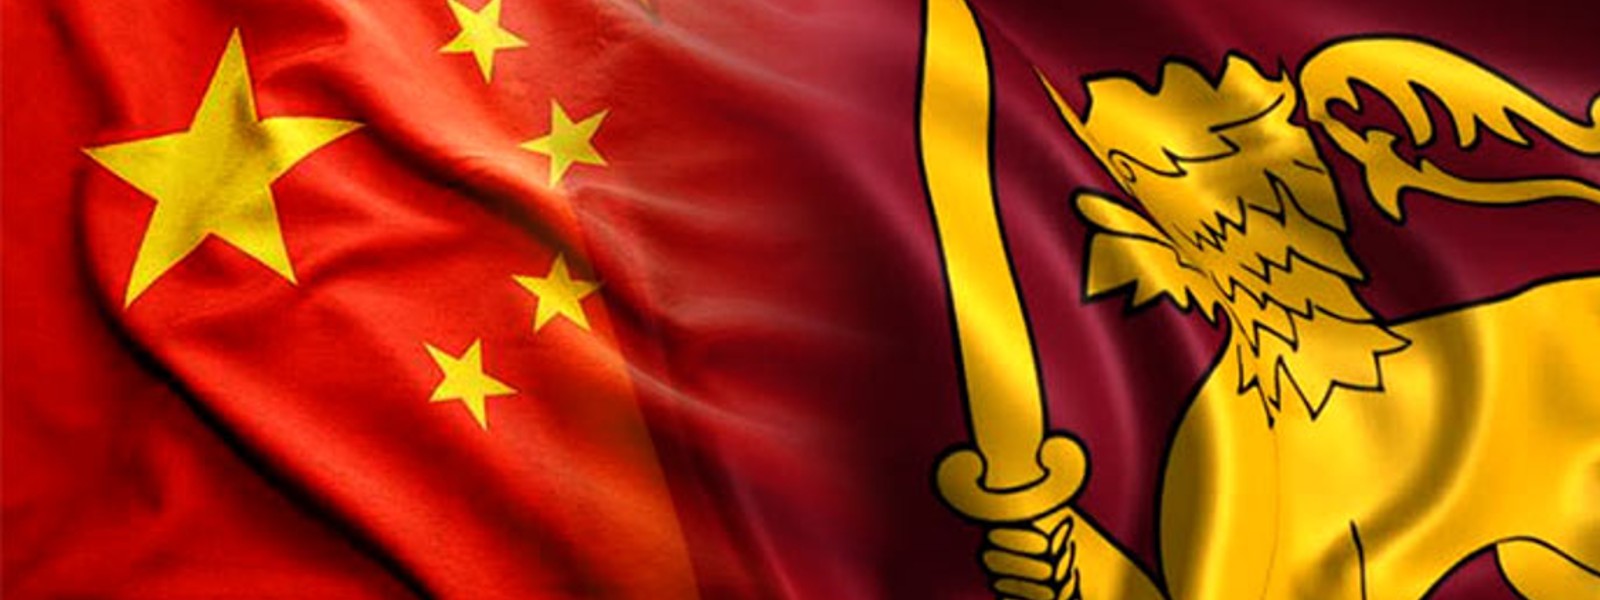 China keeps Sri Lanka in debt grip, stalling IMF relief